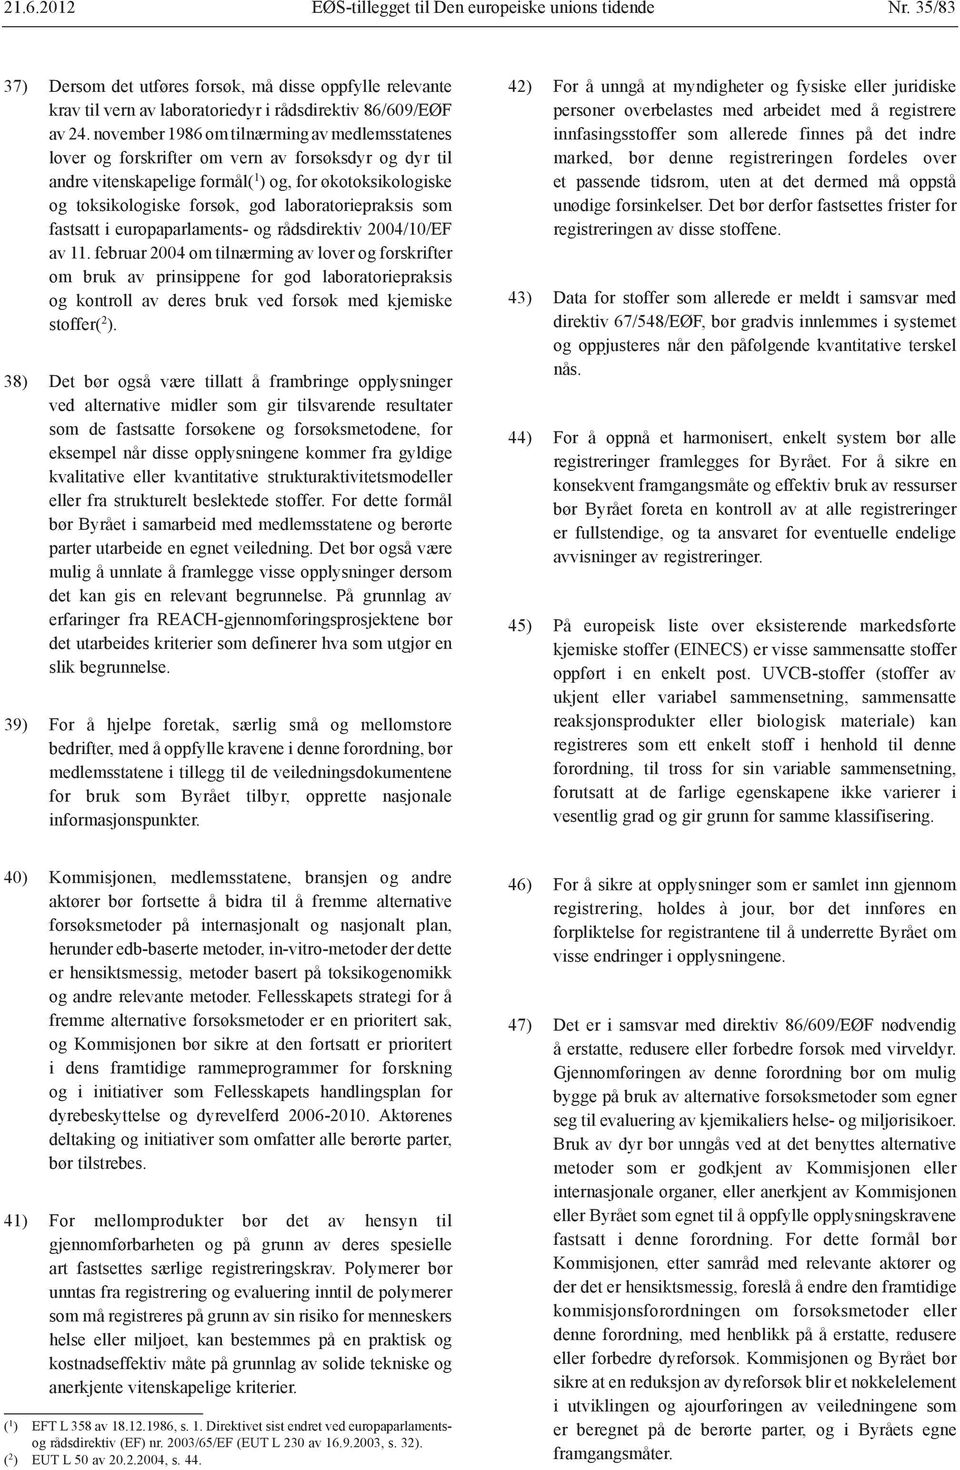 laboratoriepraksis som fastsatt i europaparlaments- og rådsdirektiv 2004/10/EF av 11.